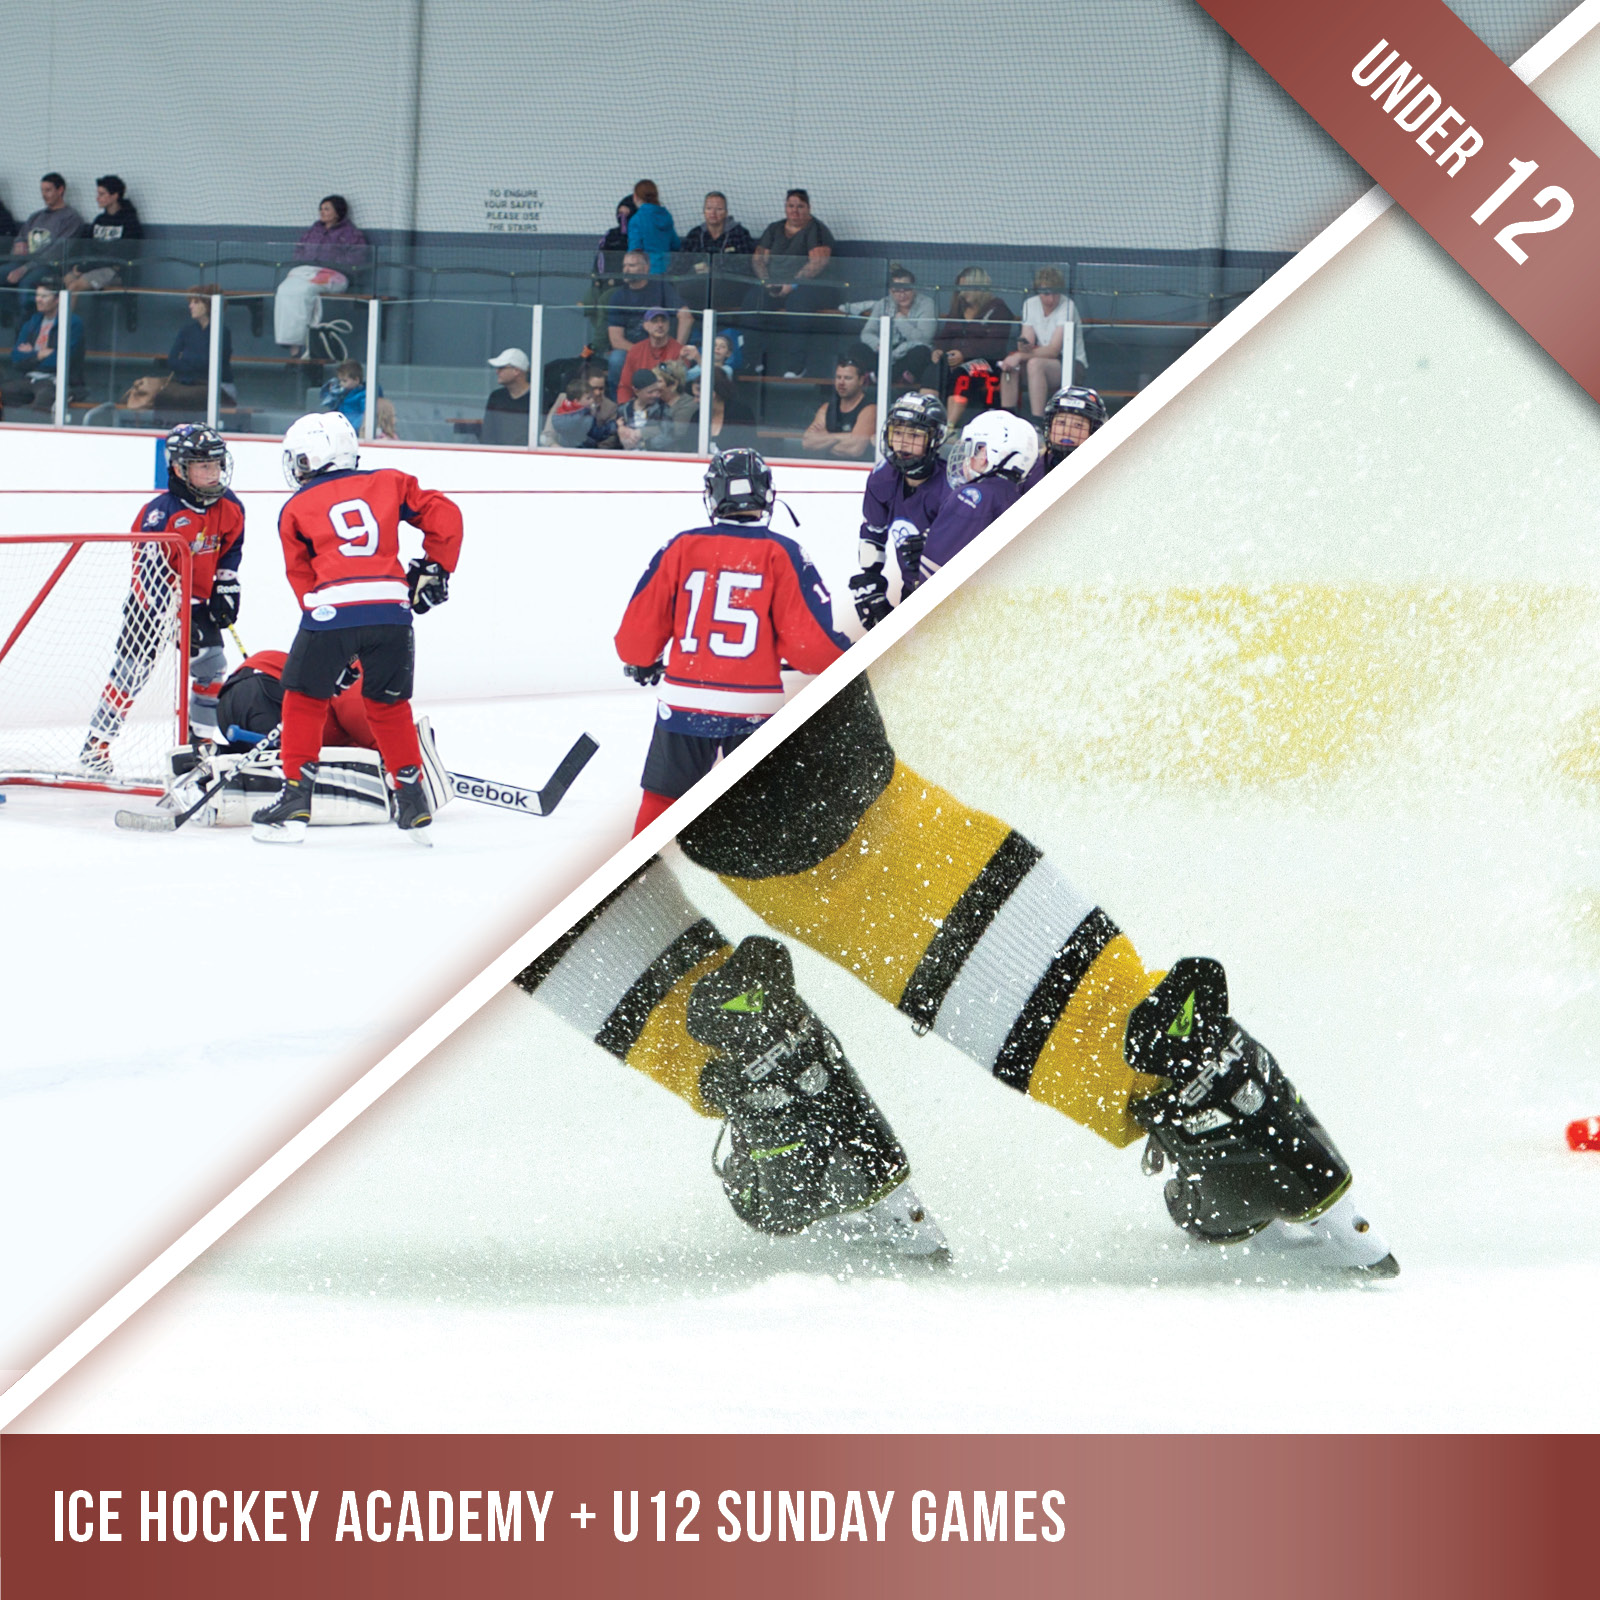 Cockburn Ice Hockey Academy + U12 Sunday Games